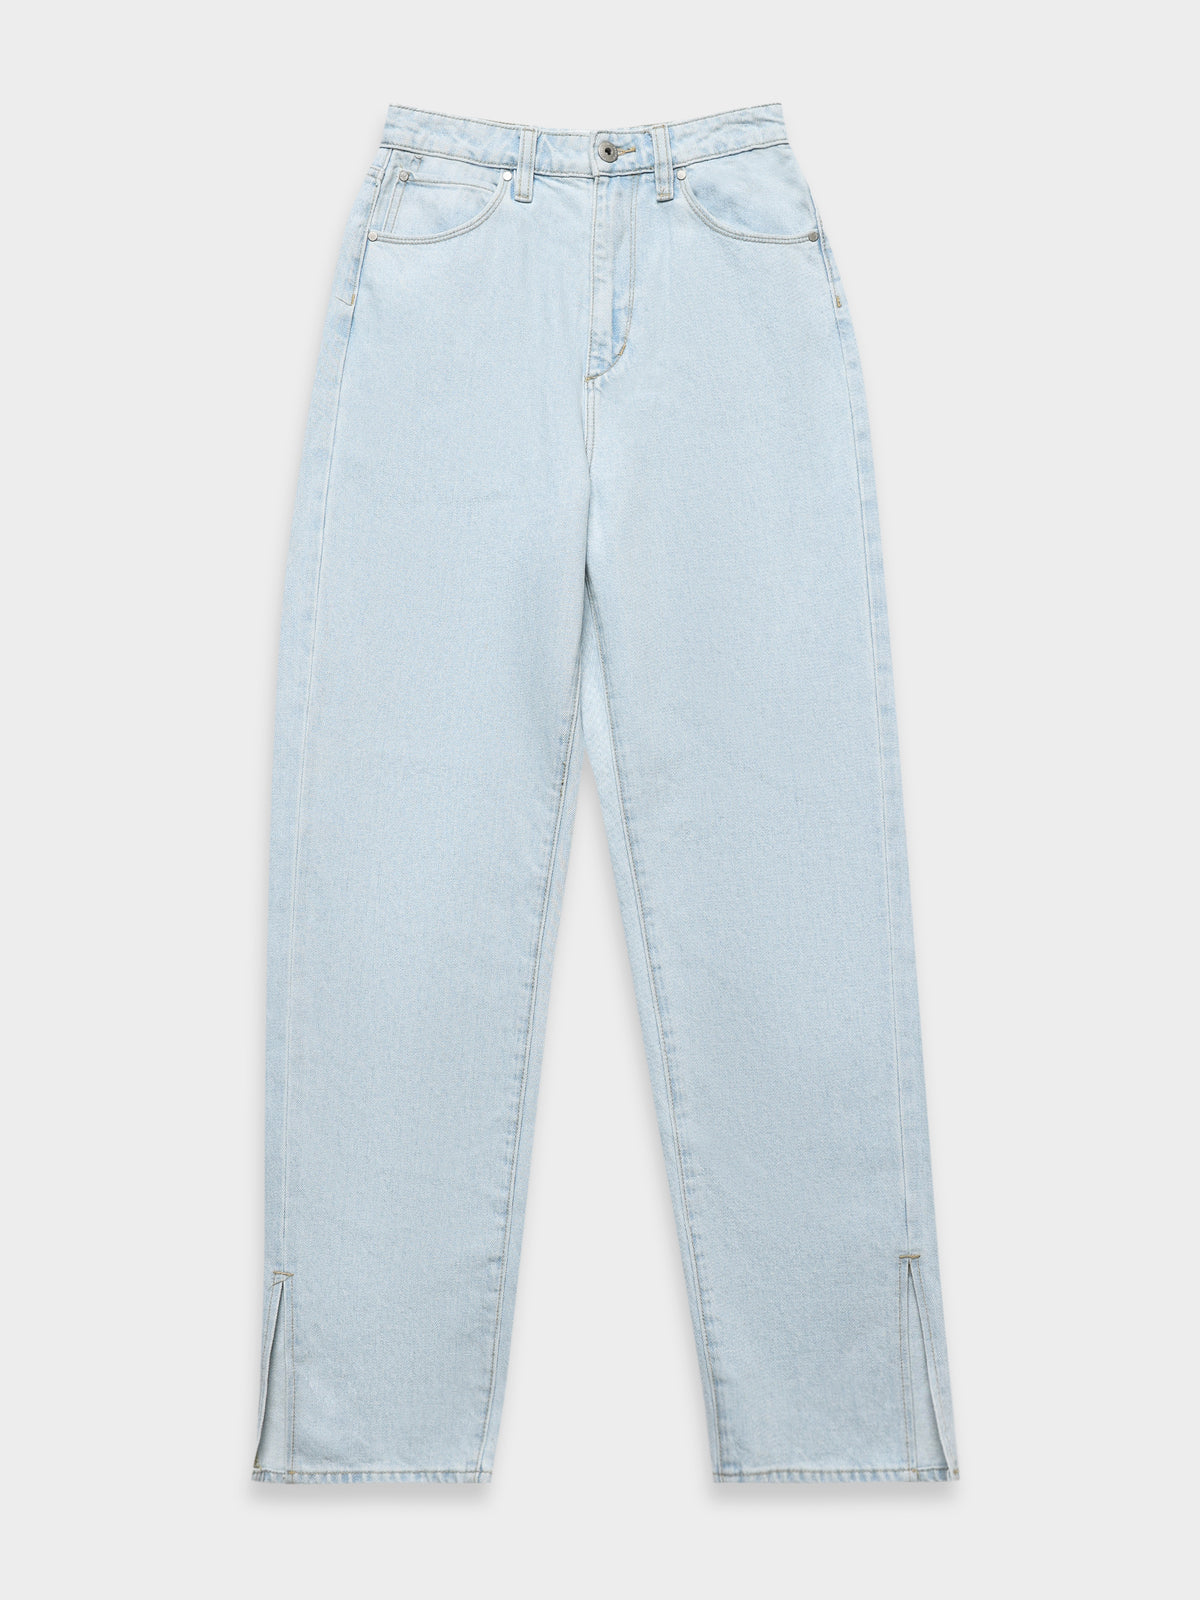 Hailey Baggy Split Jeans in Vintage Blue